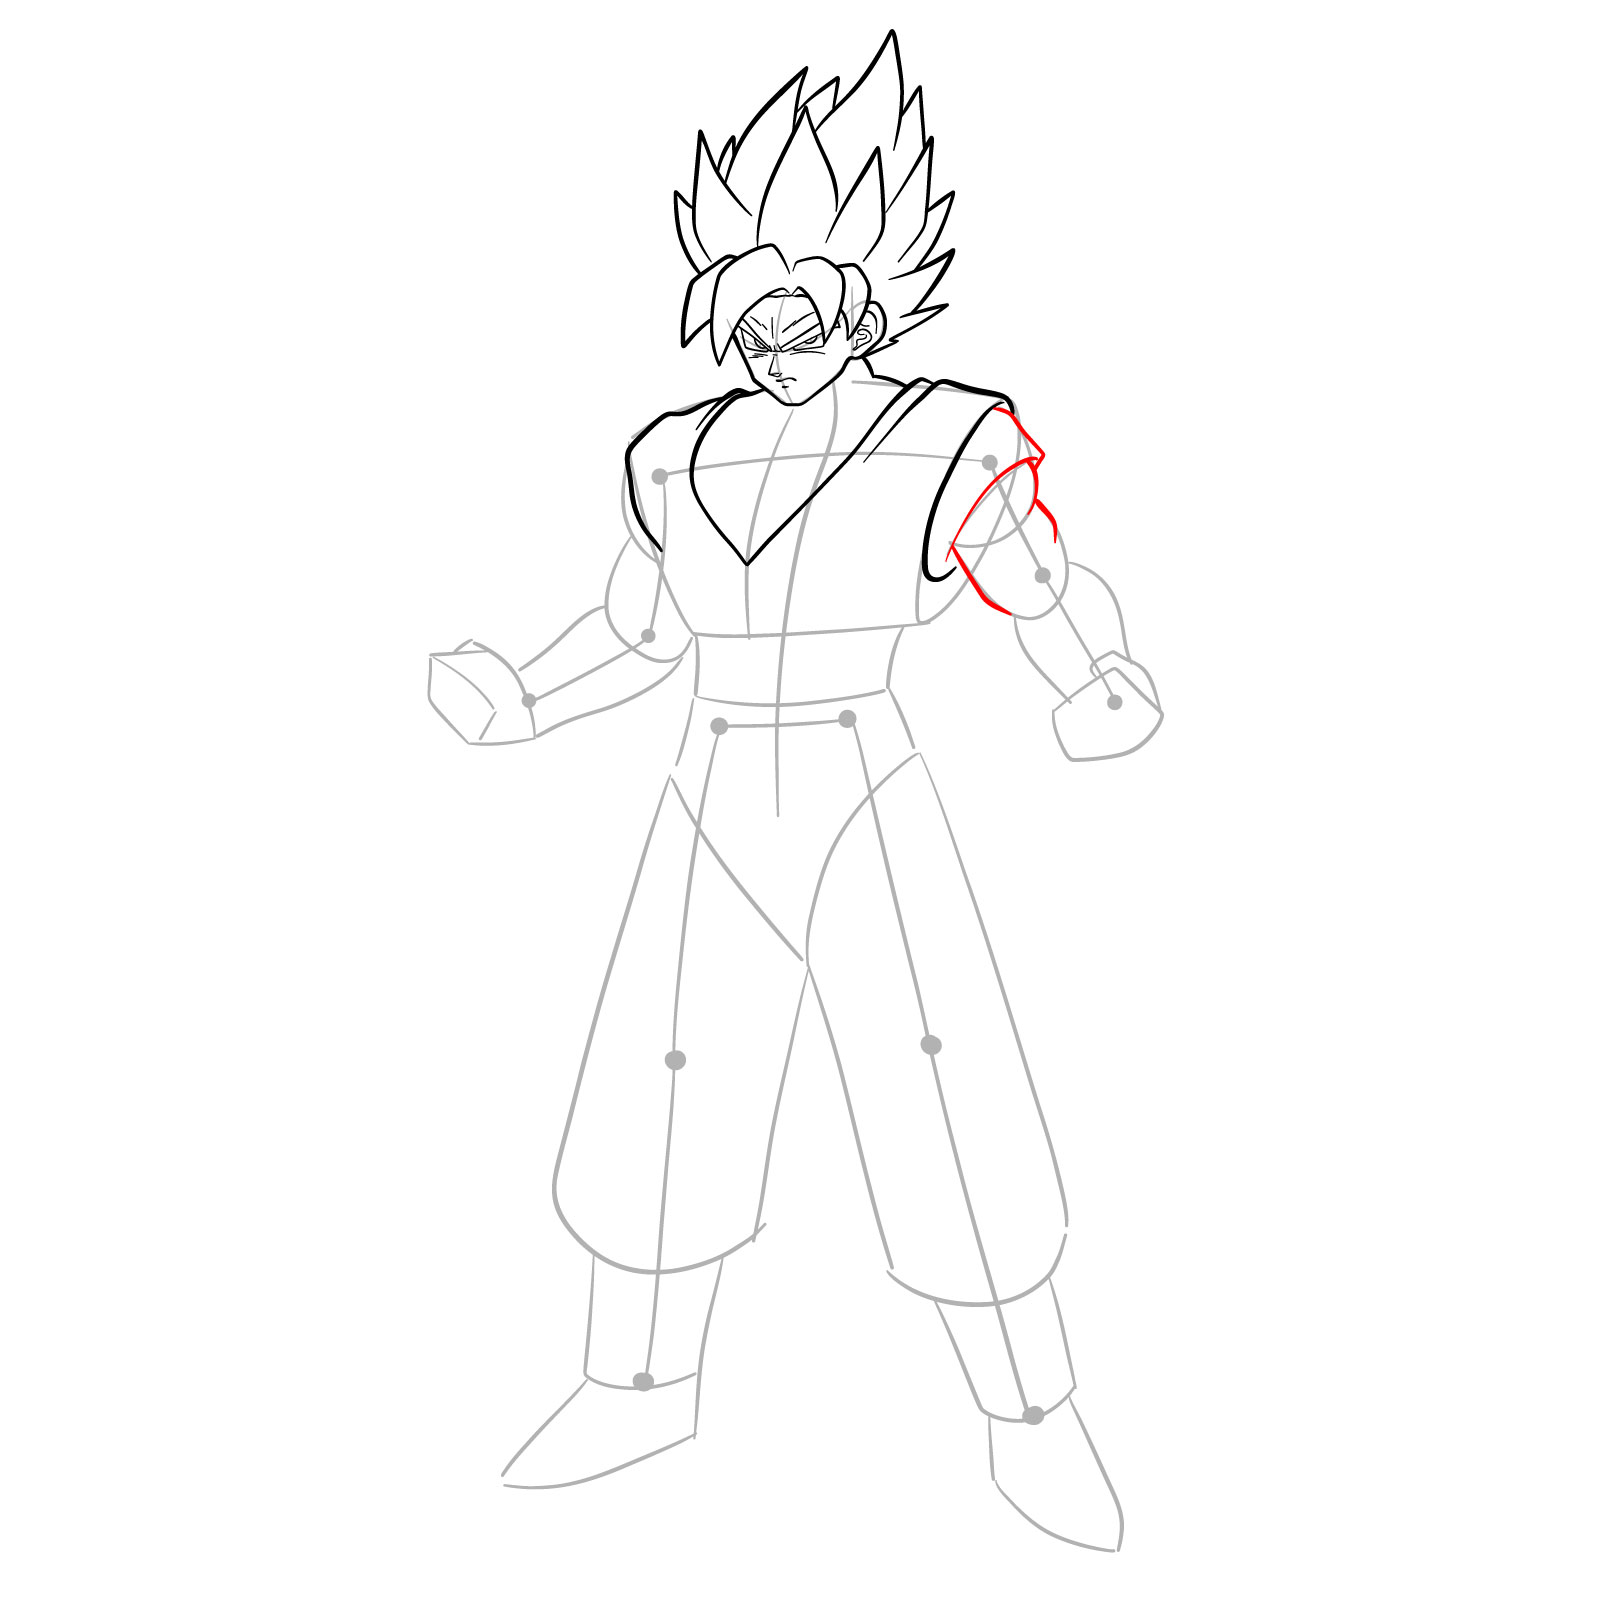 How to draw Goku in Super Saiyan form - step 18